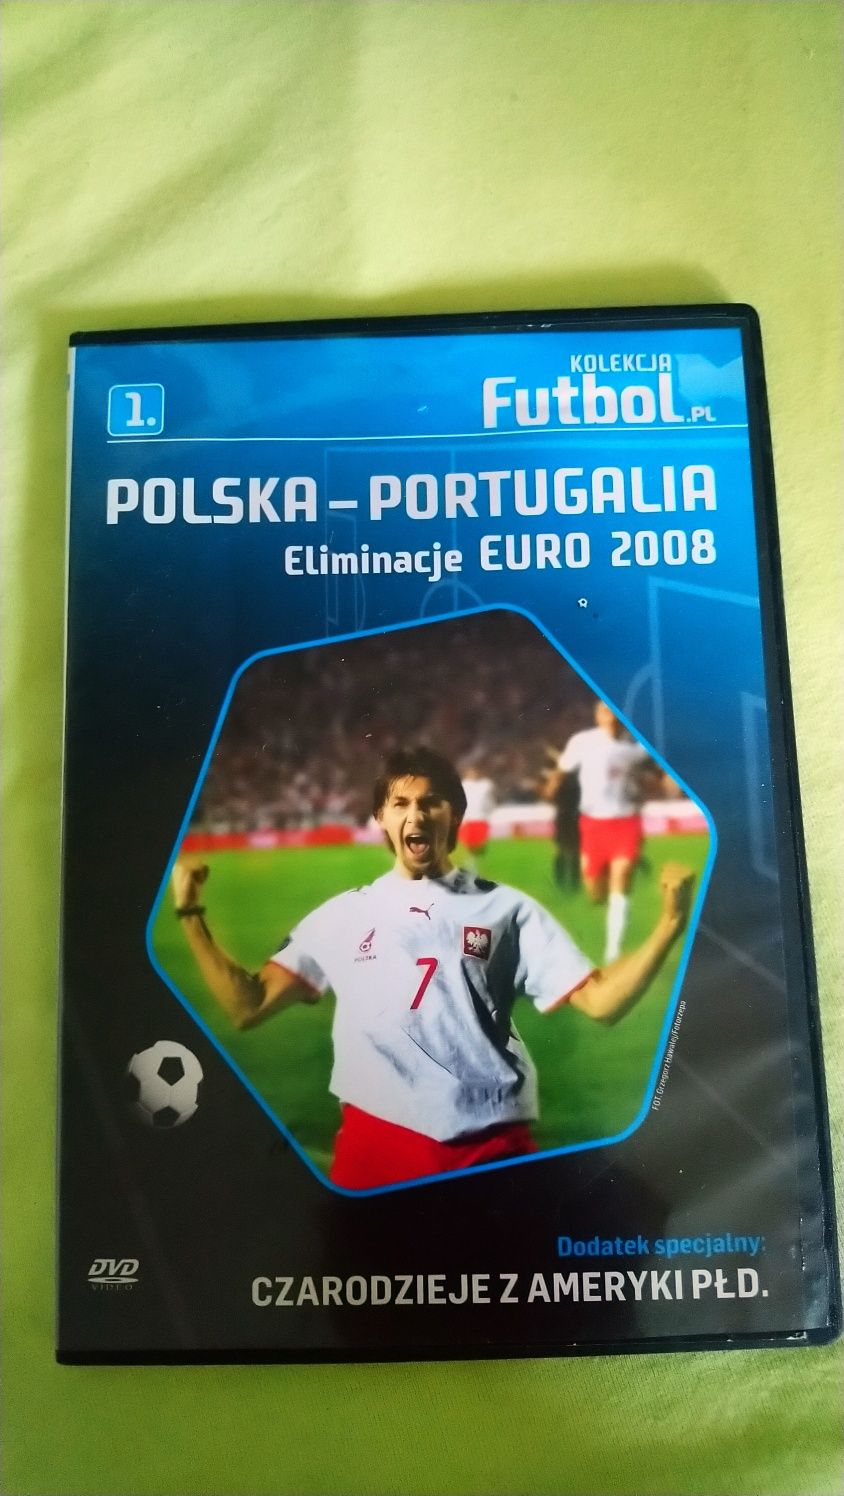 Plyta dvd mecz polska-portugalia kolekcja futbol